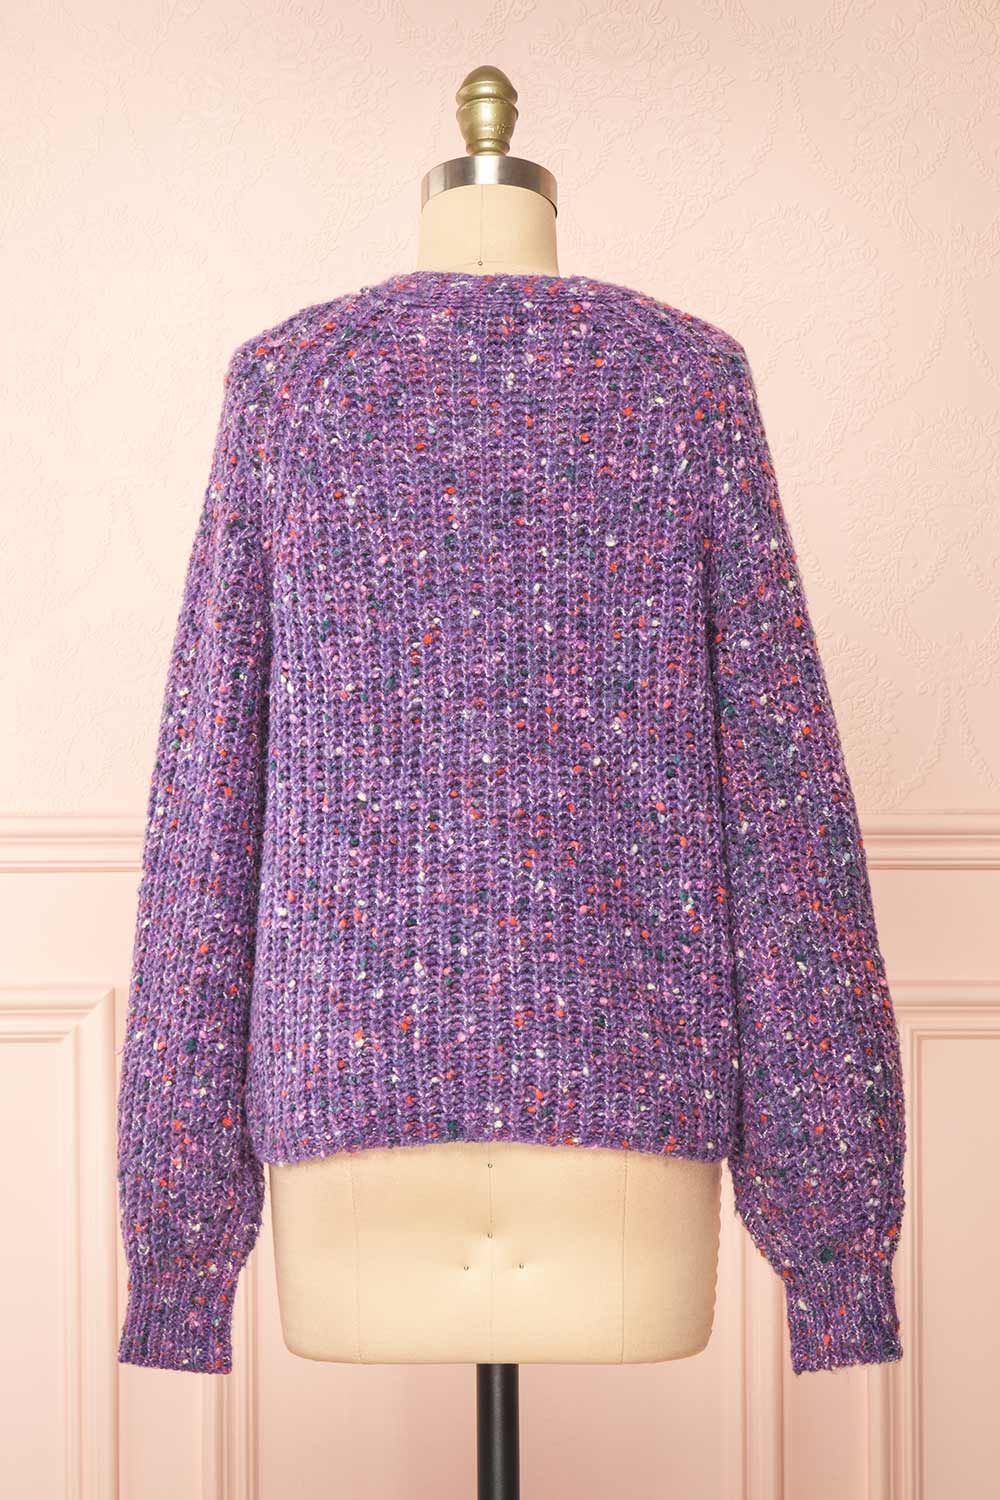 Manue Purple Cardigan w/ Multicoloured Speckles | Boutique 1861 back view